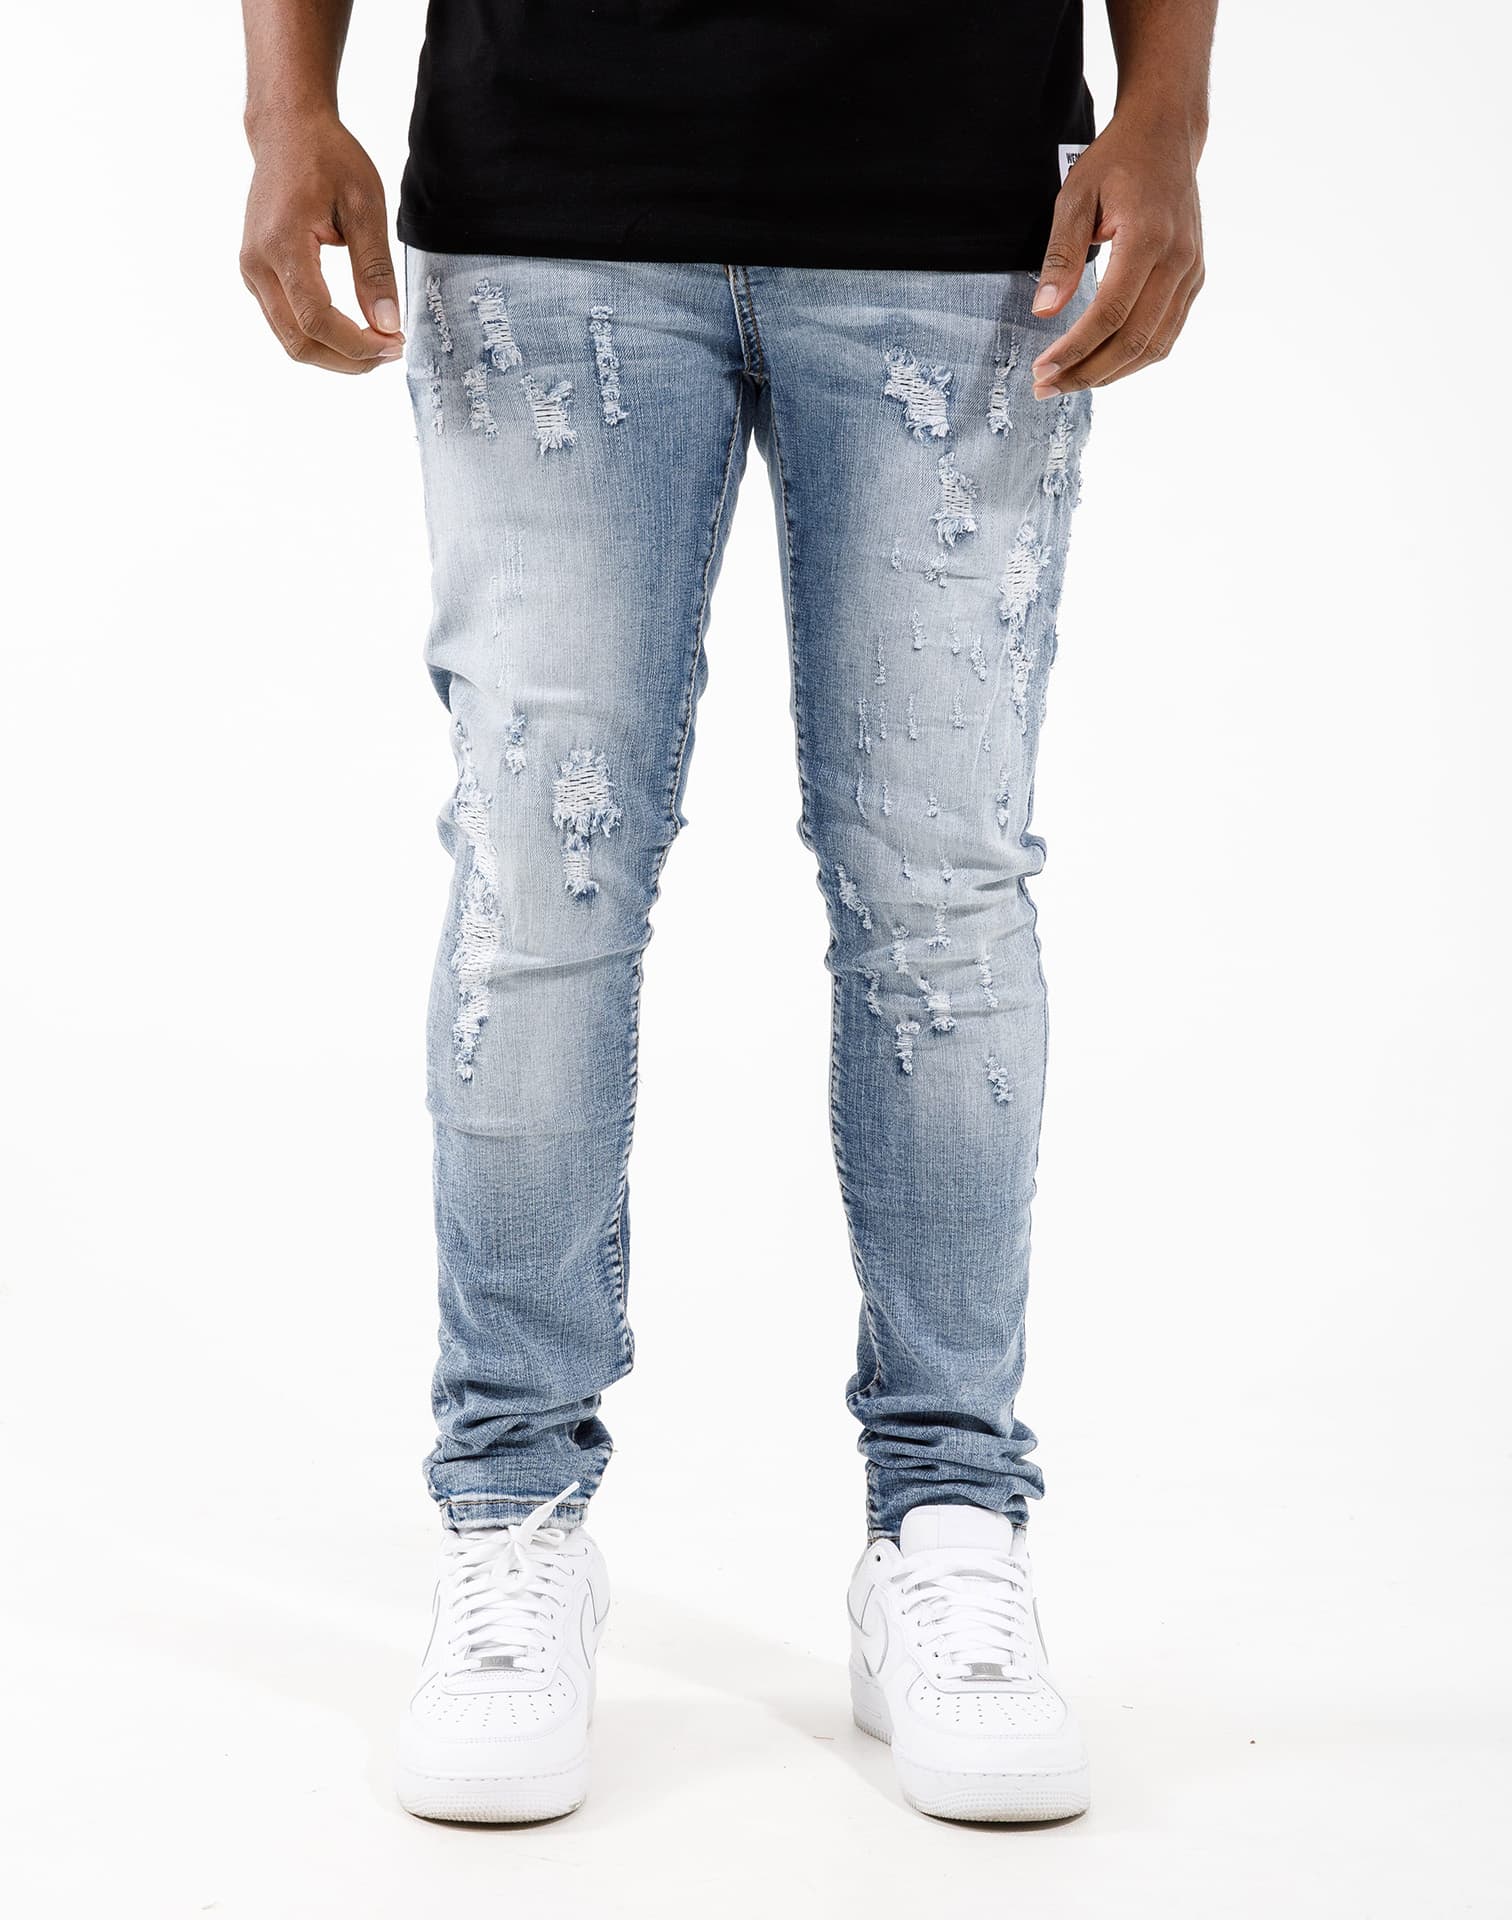 United Cotes Industrial Indigo Jeans  - Blue - Size: 40